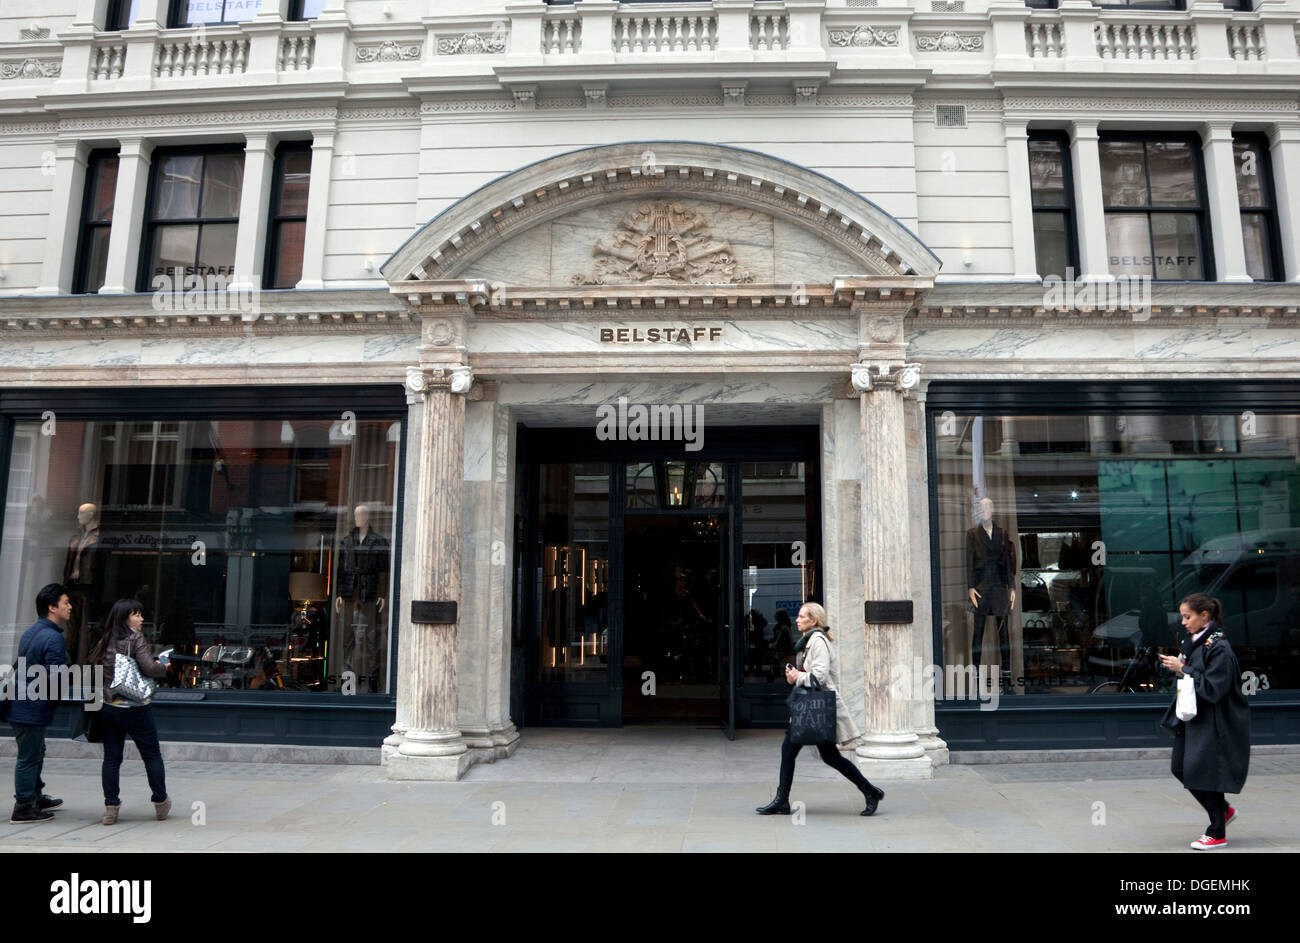 Belstaff fashion store in New Bond Street, London Stock Photo - Alamy